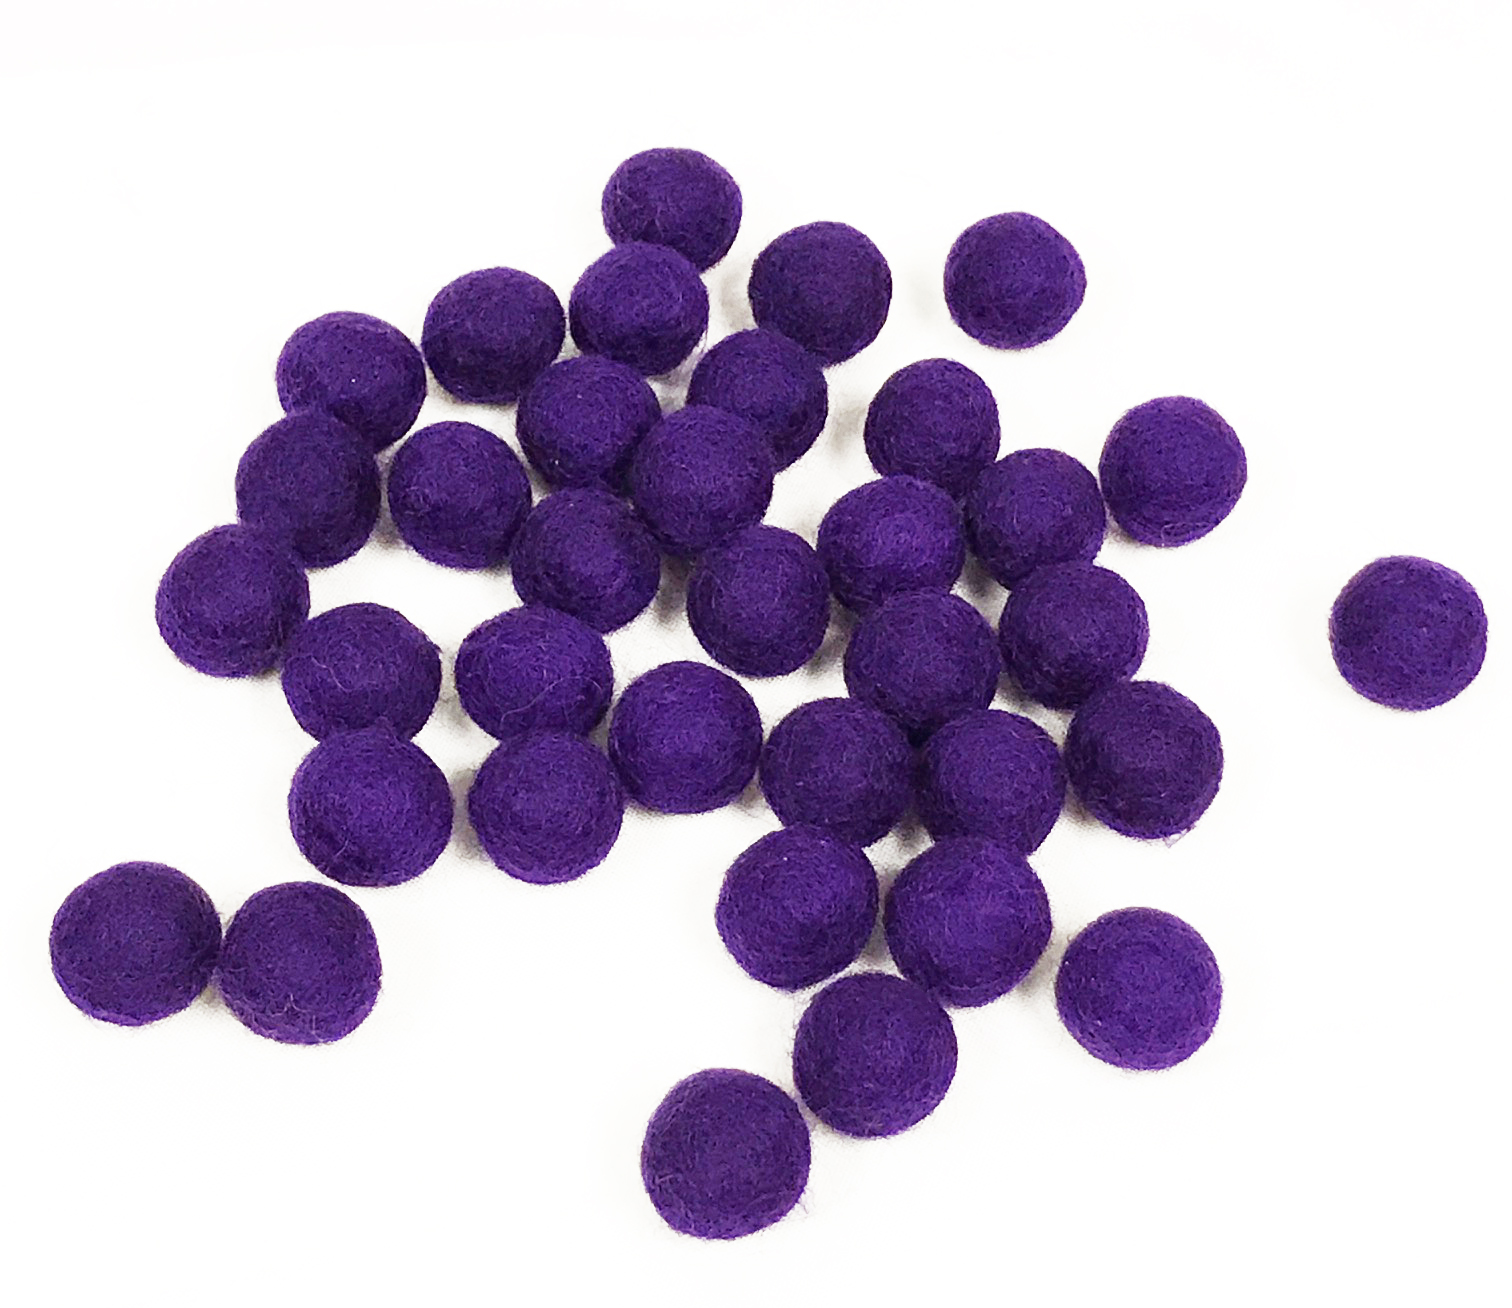 Yarn Place Felt Balls - 100 Pure Wool Beads 20mm Grape